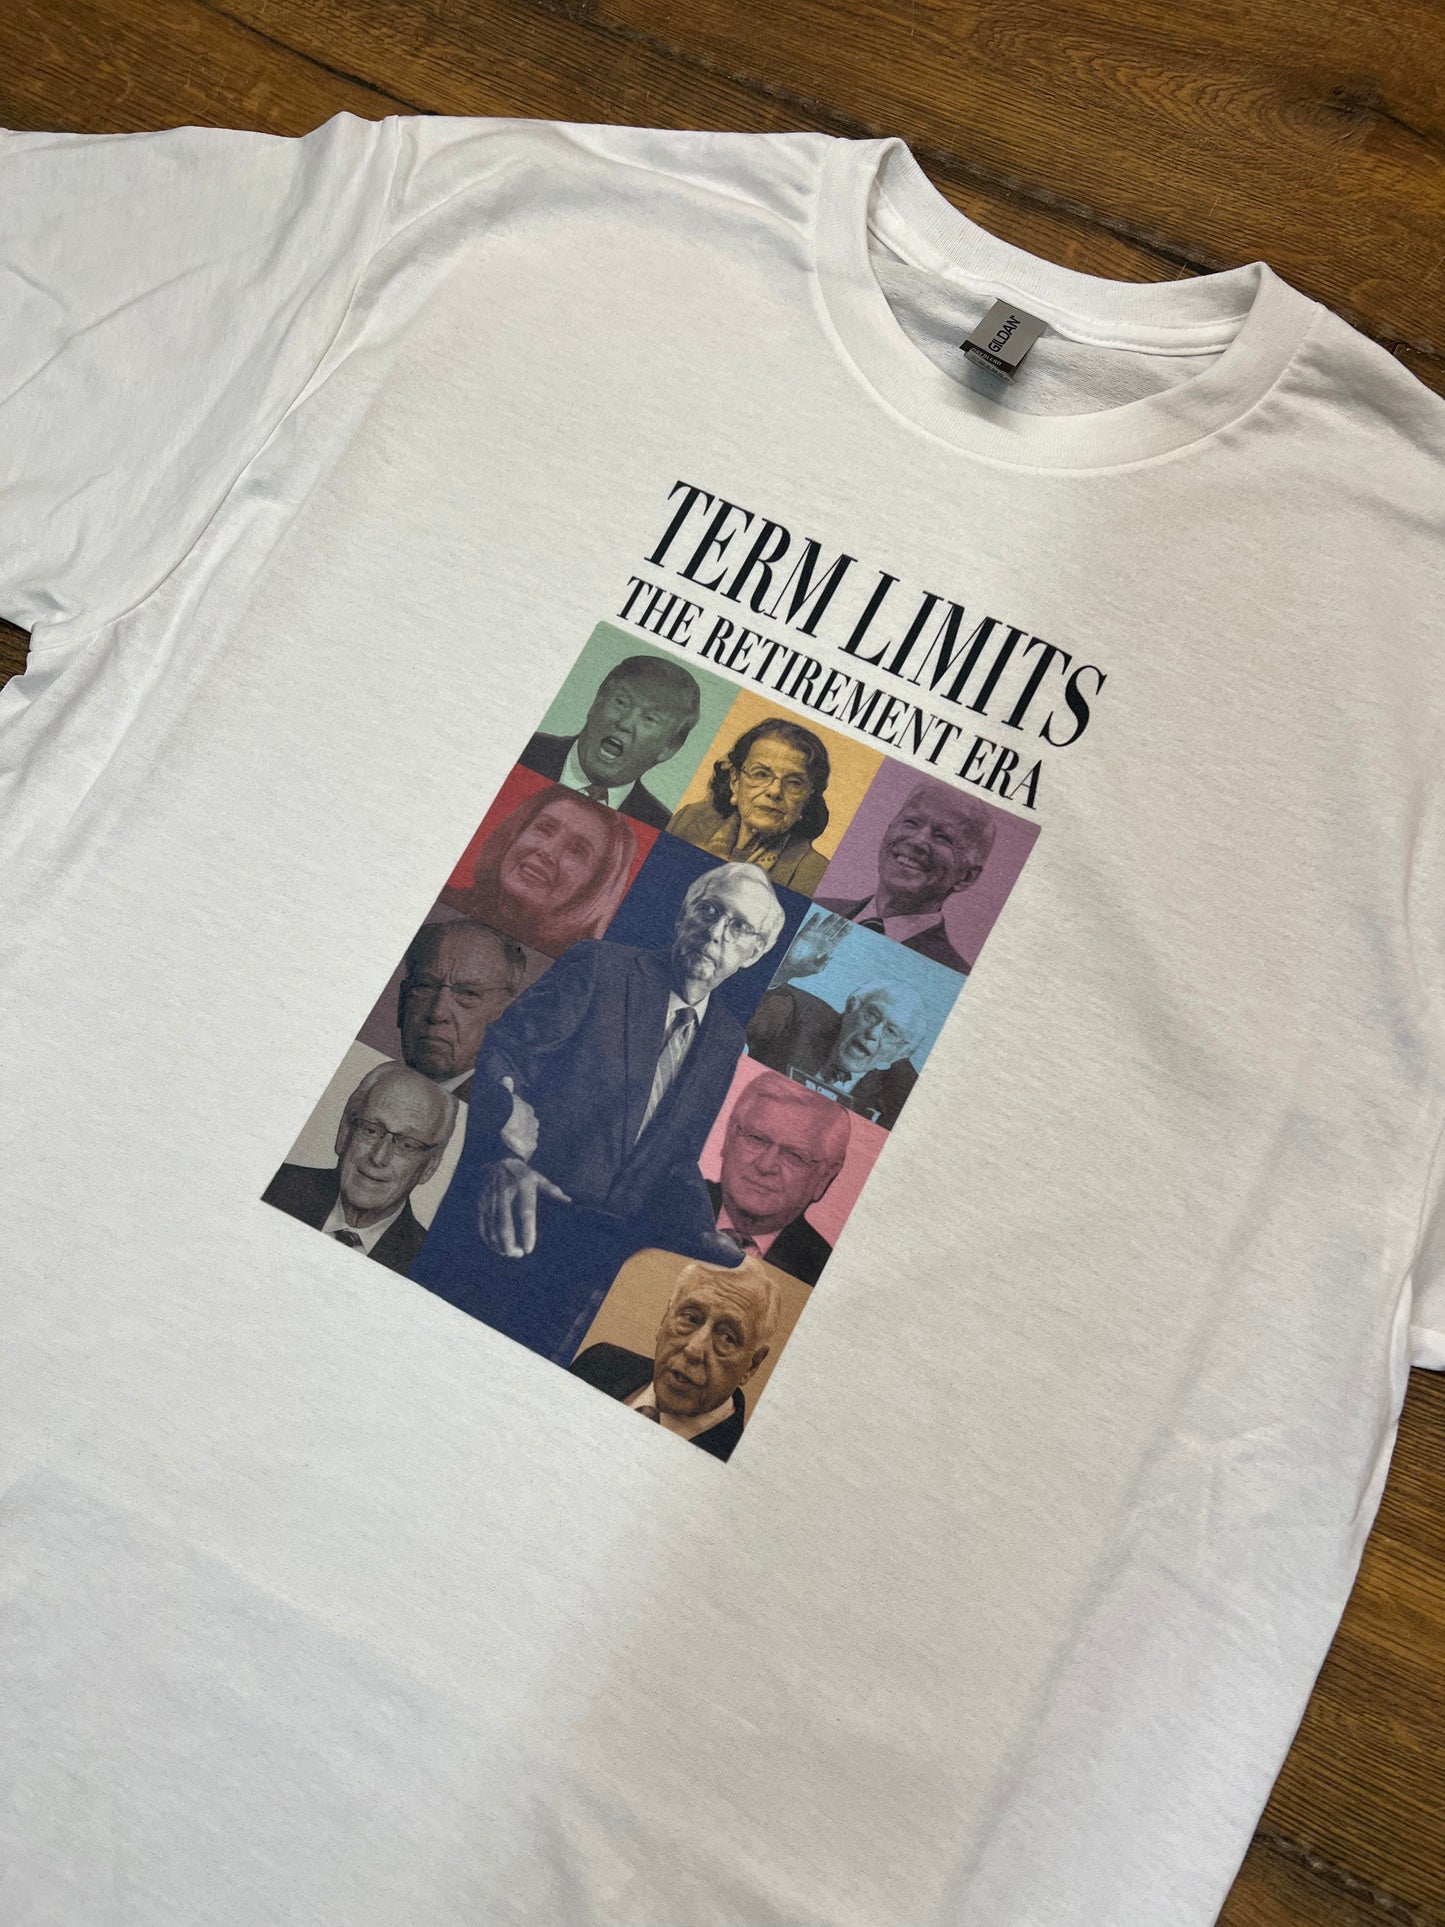 Term Limits - The Retirement Era Tour Shirt